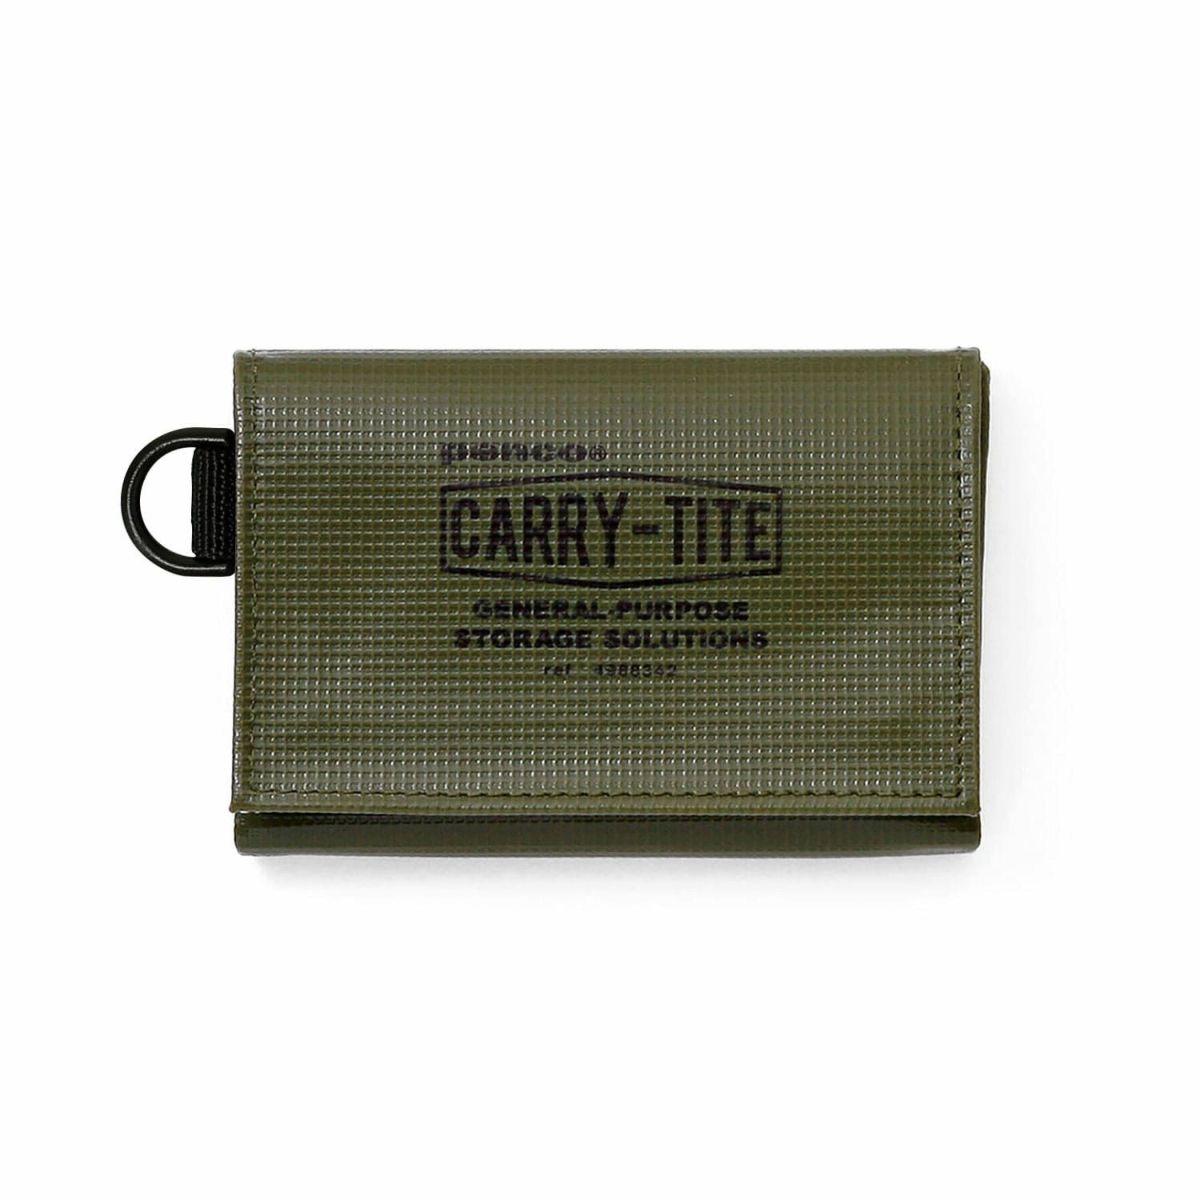 Carry Tite Case S